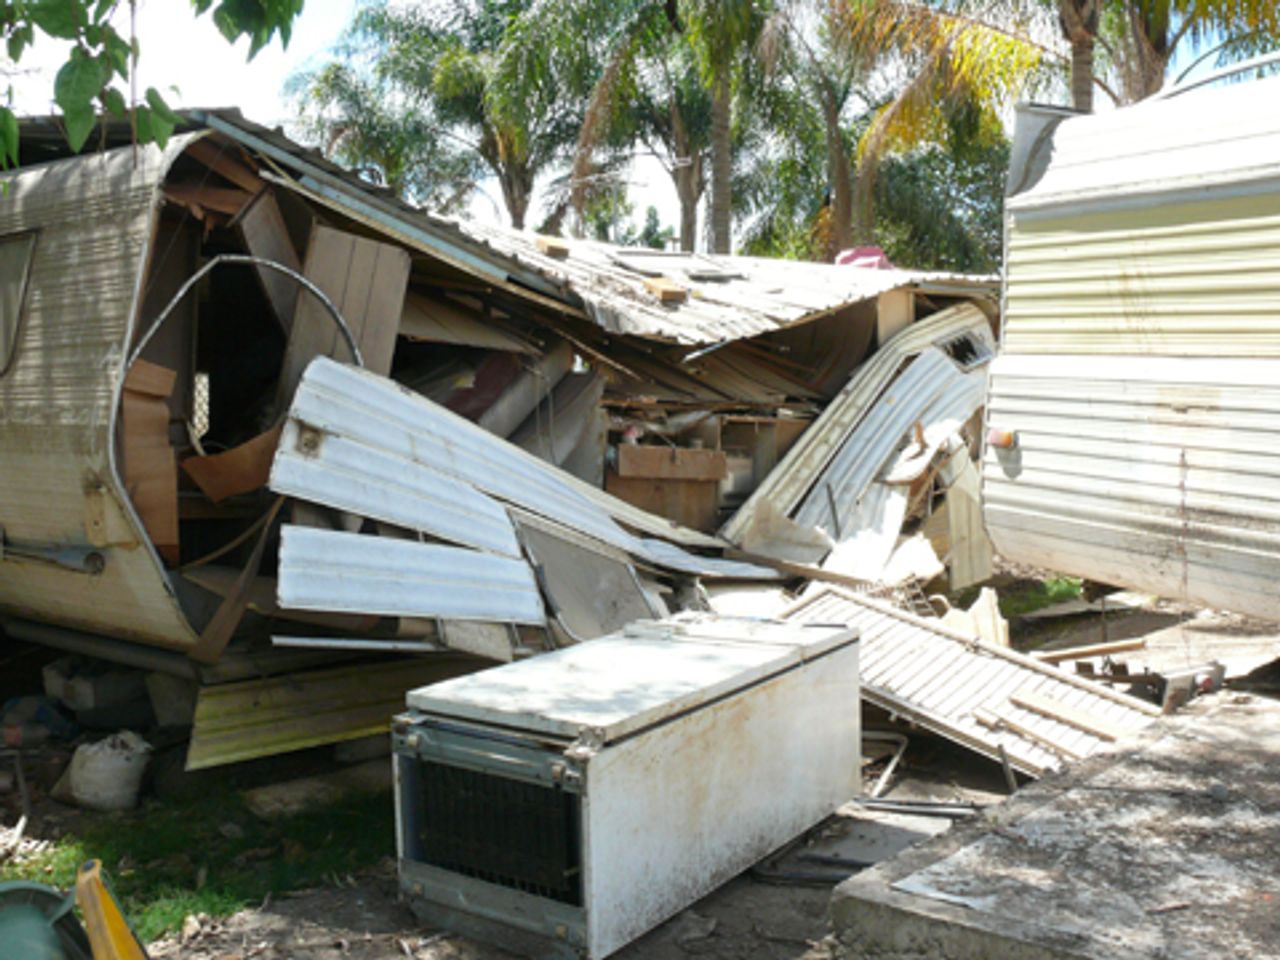 Destroyed caravans in Goodna